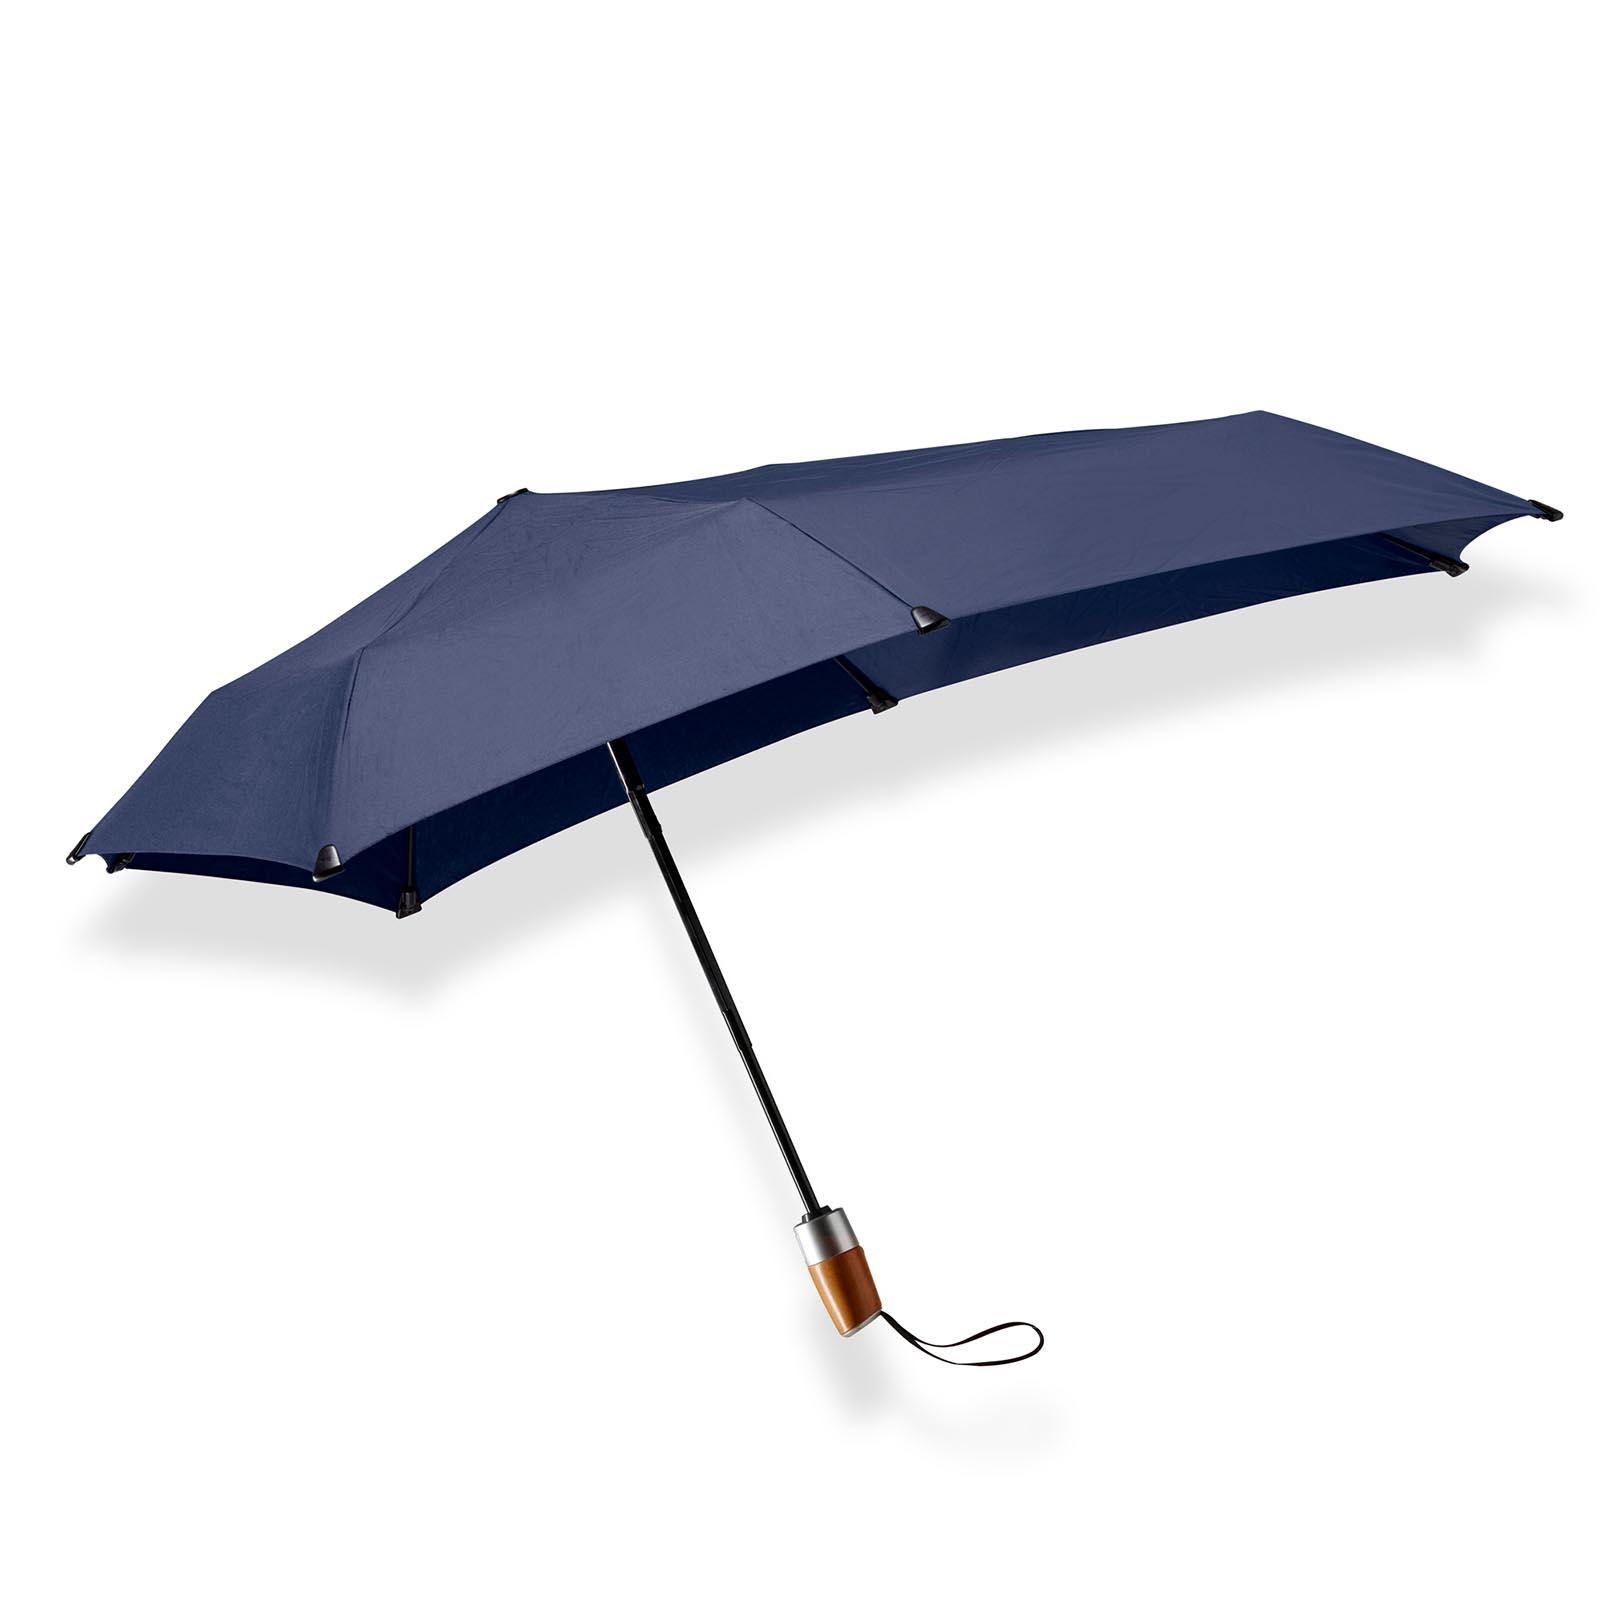 Blauwe opvouwbare paraplu mini automatic deluxe kopen? senz° mini midnight blue